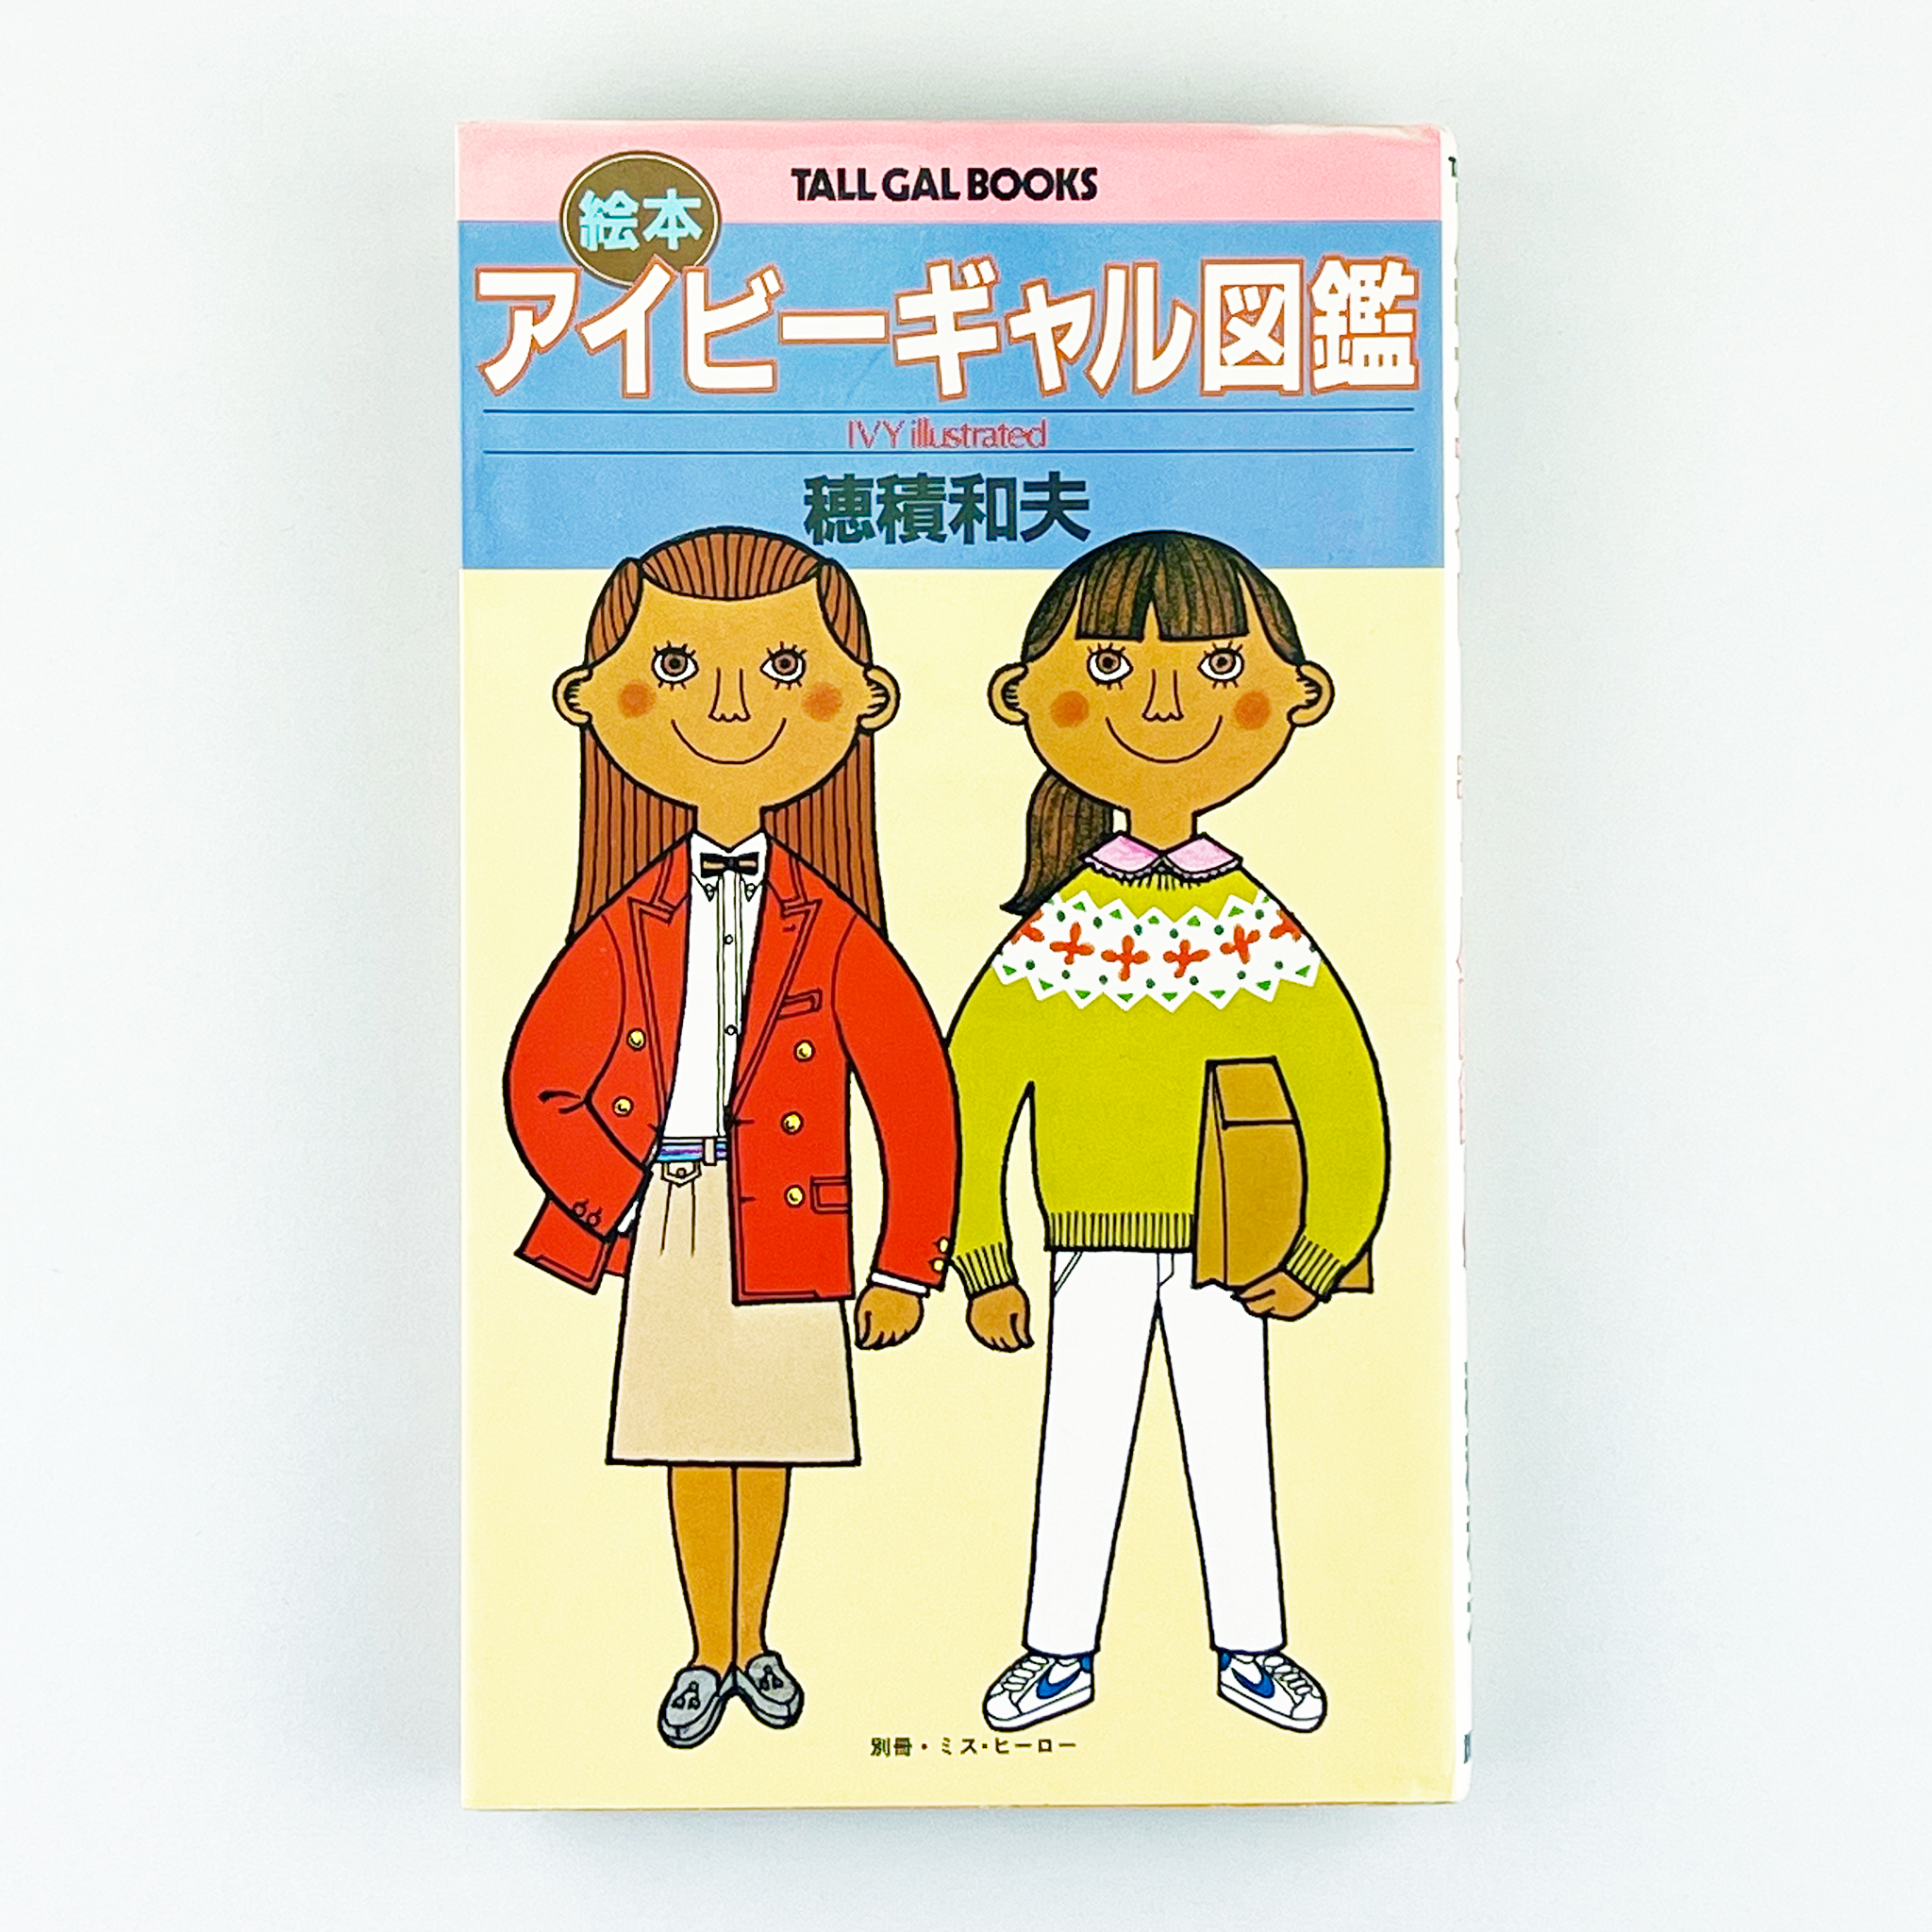 TALL GAL BOOKS 絵本アイビーギャル図鑑 - 1980.10 – SPs.wonderland